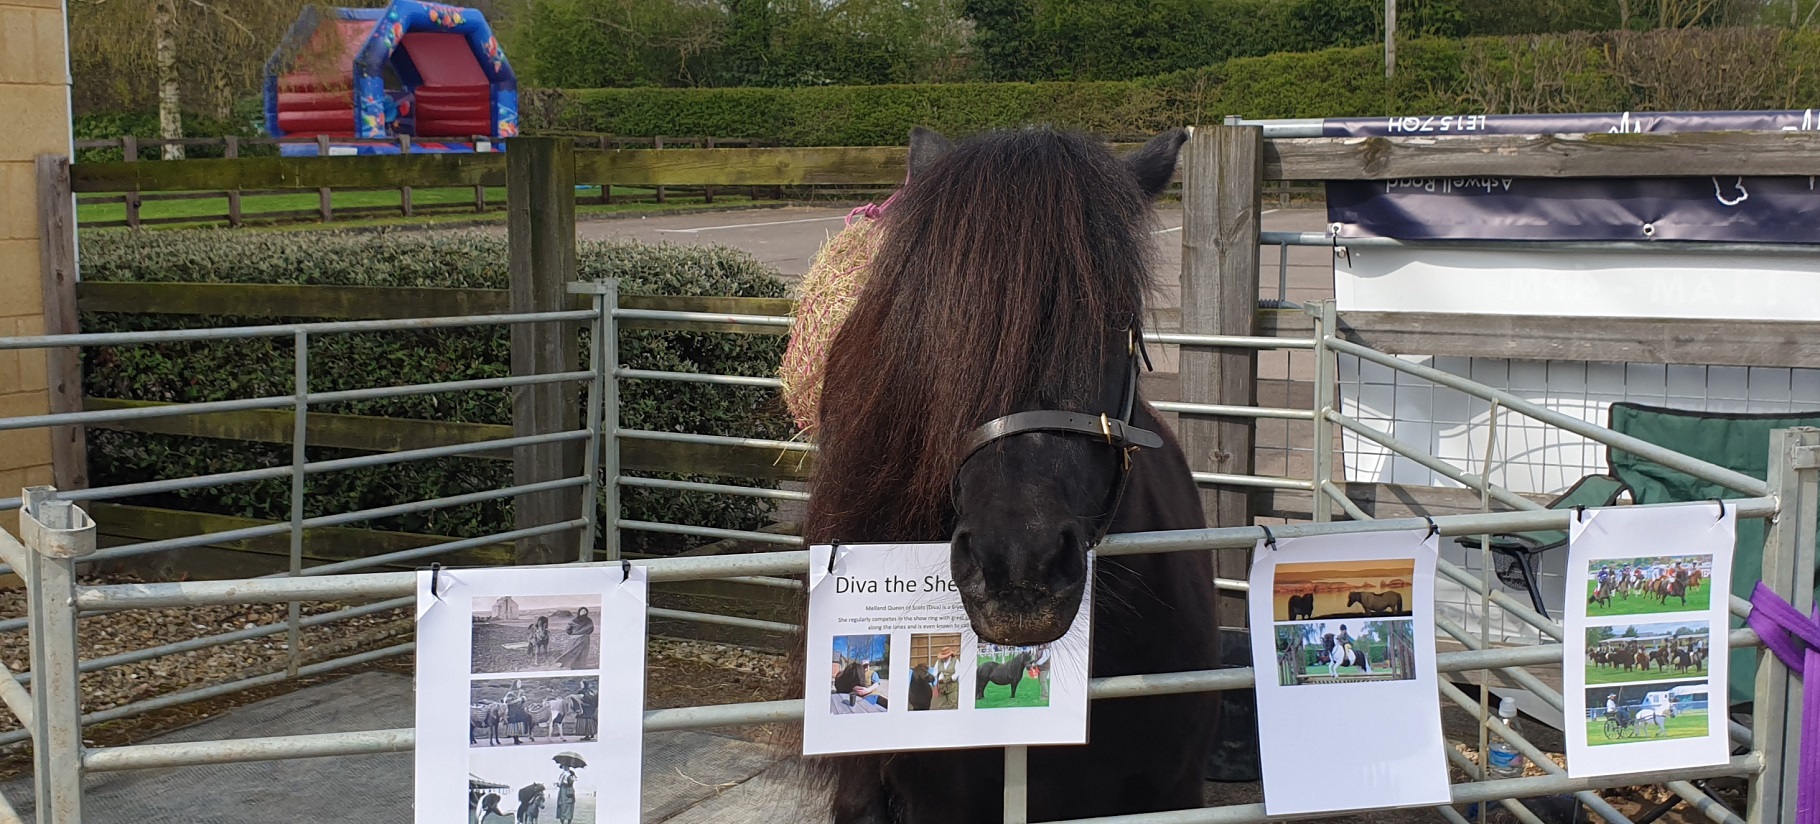 The Not-So-Secret Diary of Diva the Shetland Pony - Open Day